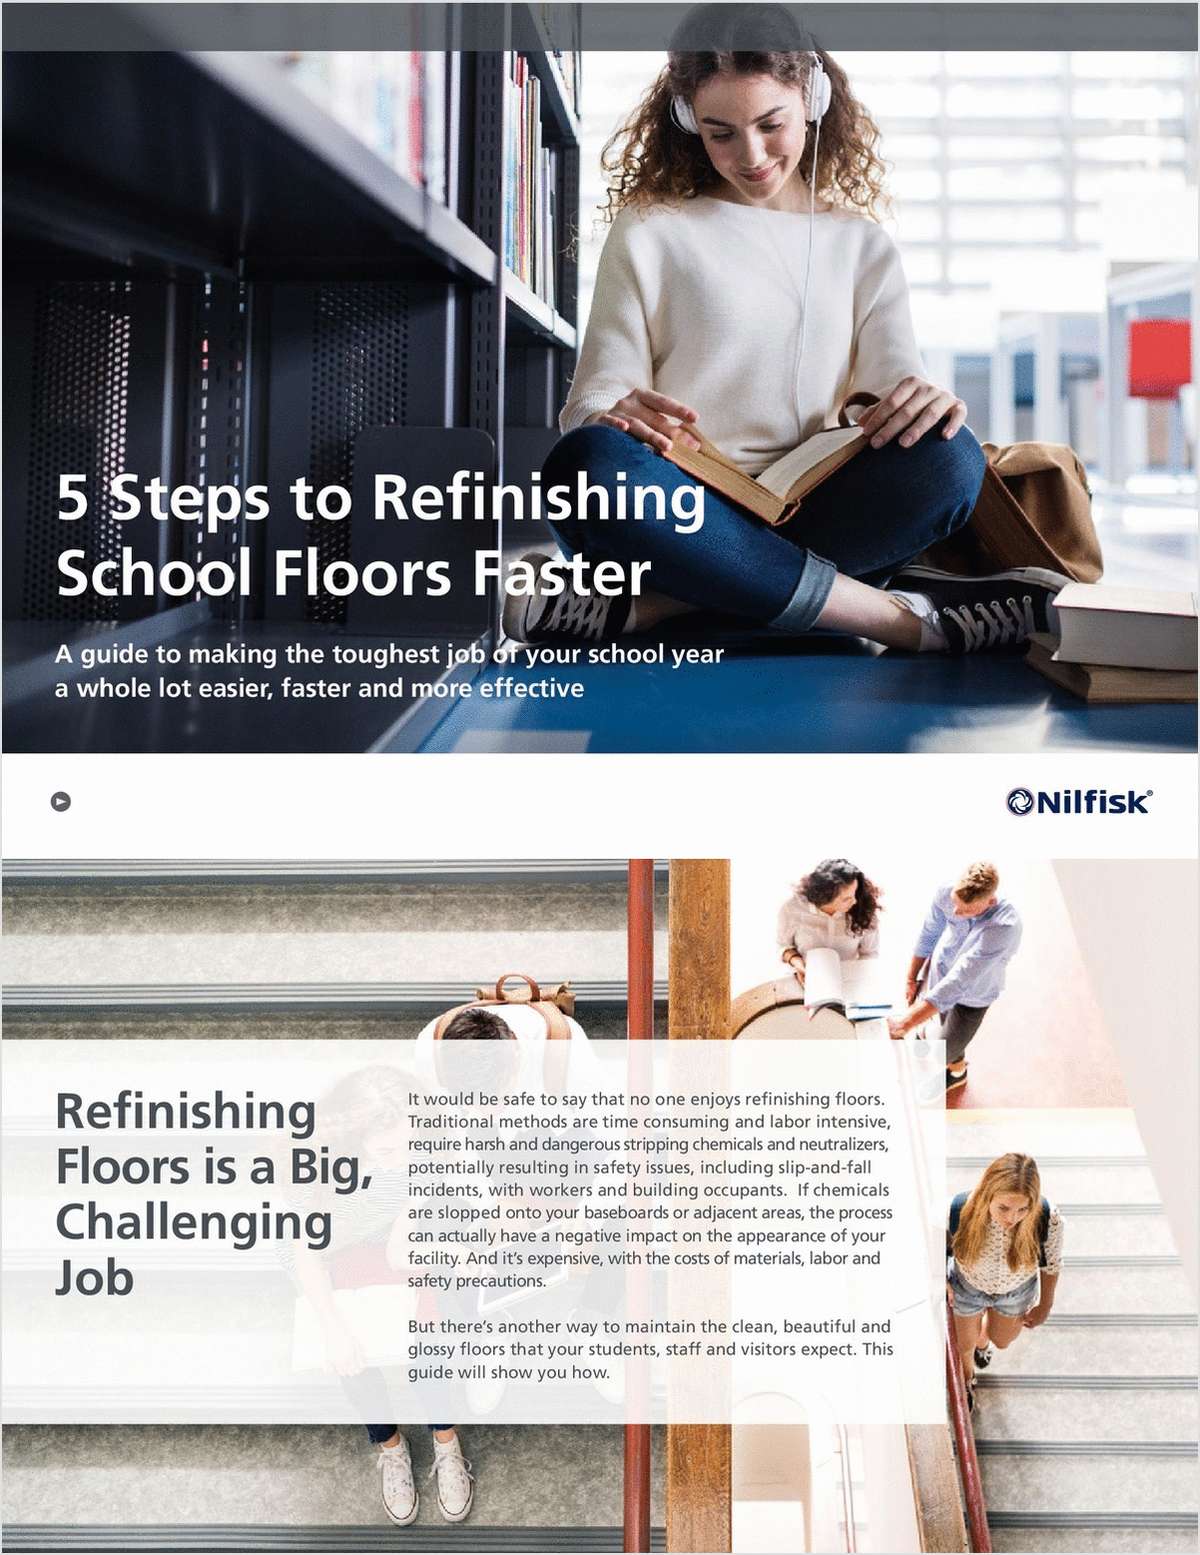 5 Steps to Refinishing School Floors Faster